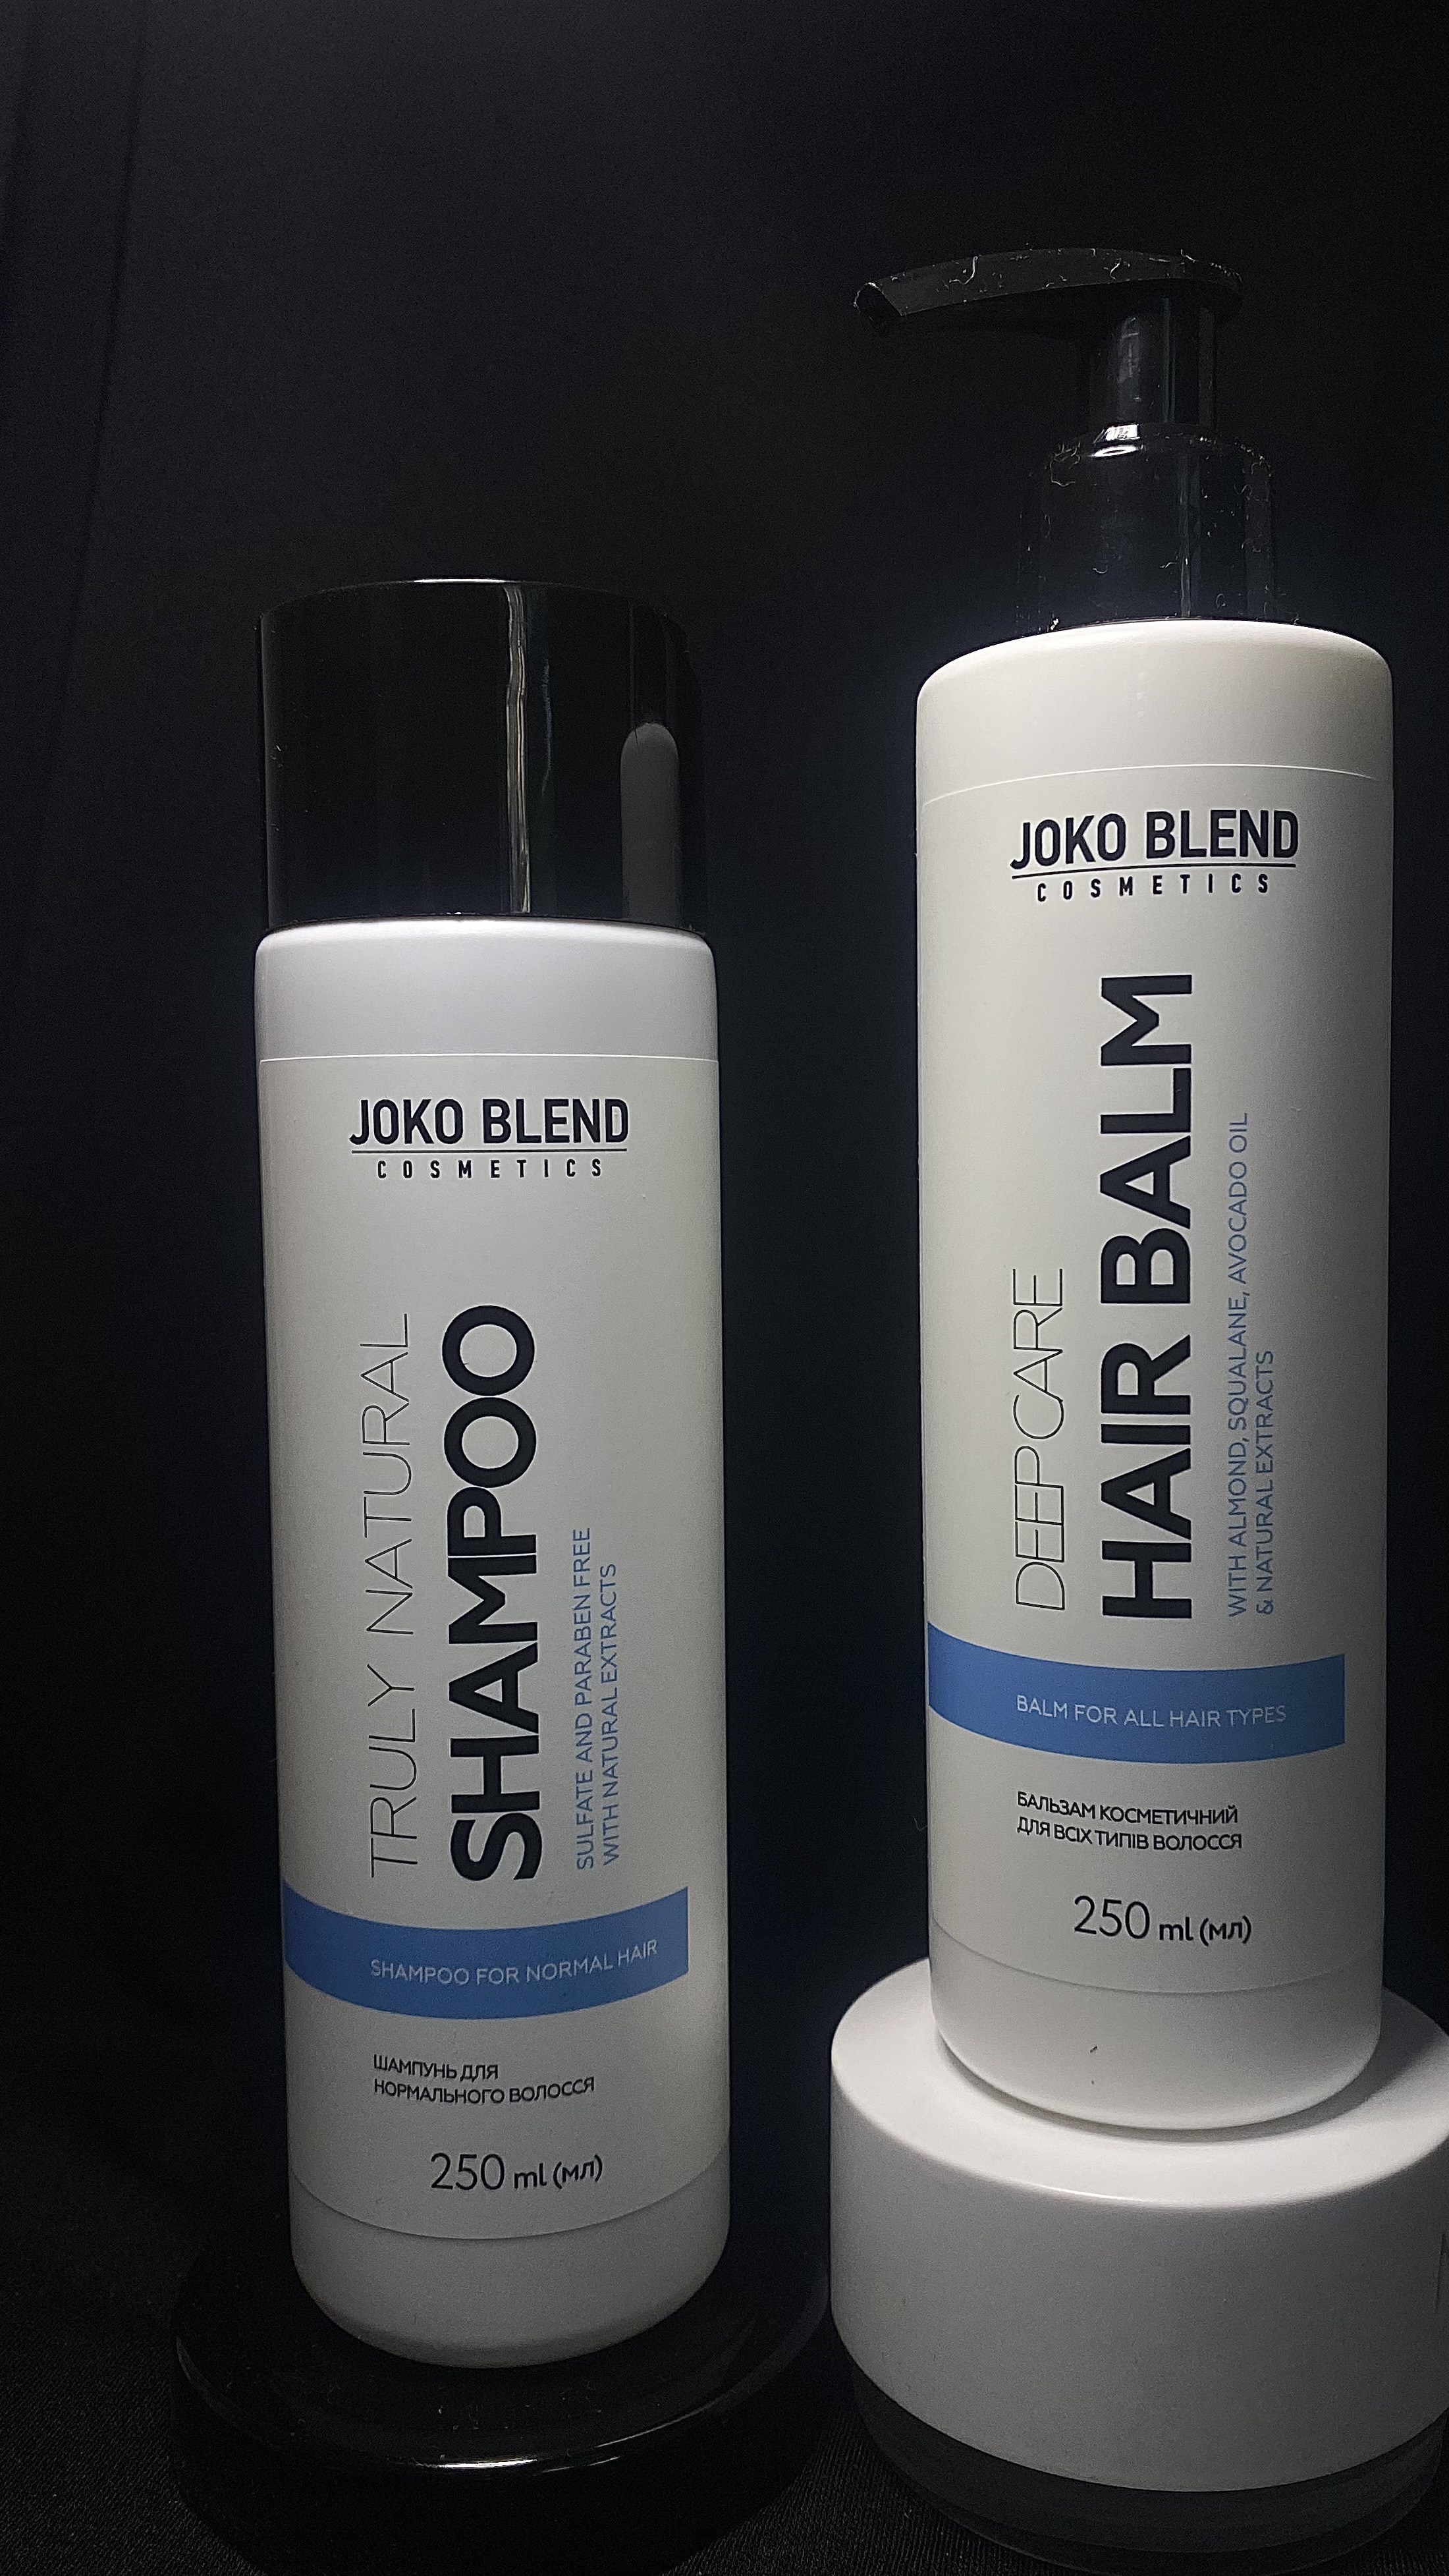 Joko Blend Hair Care